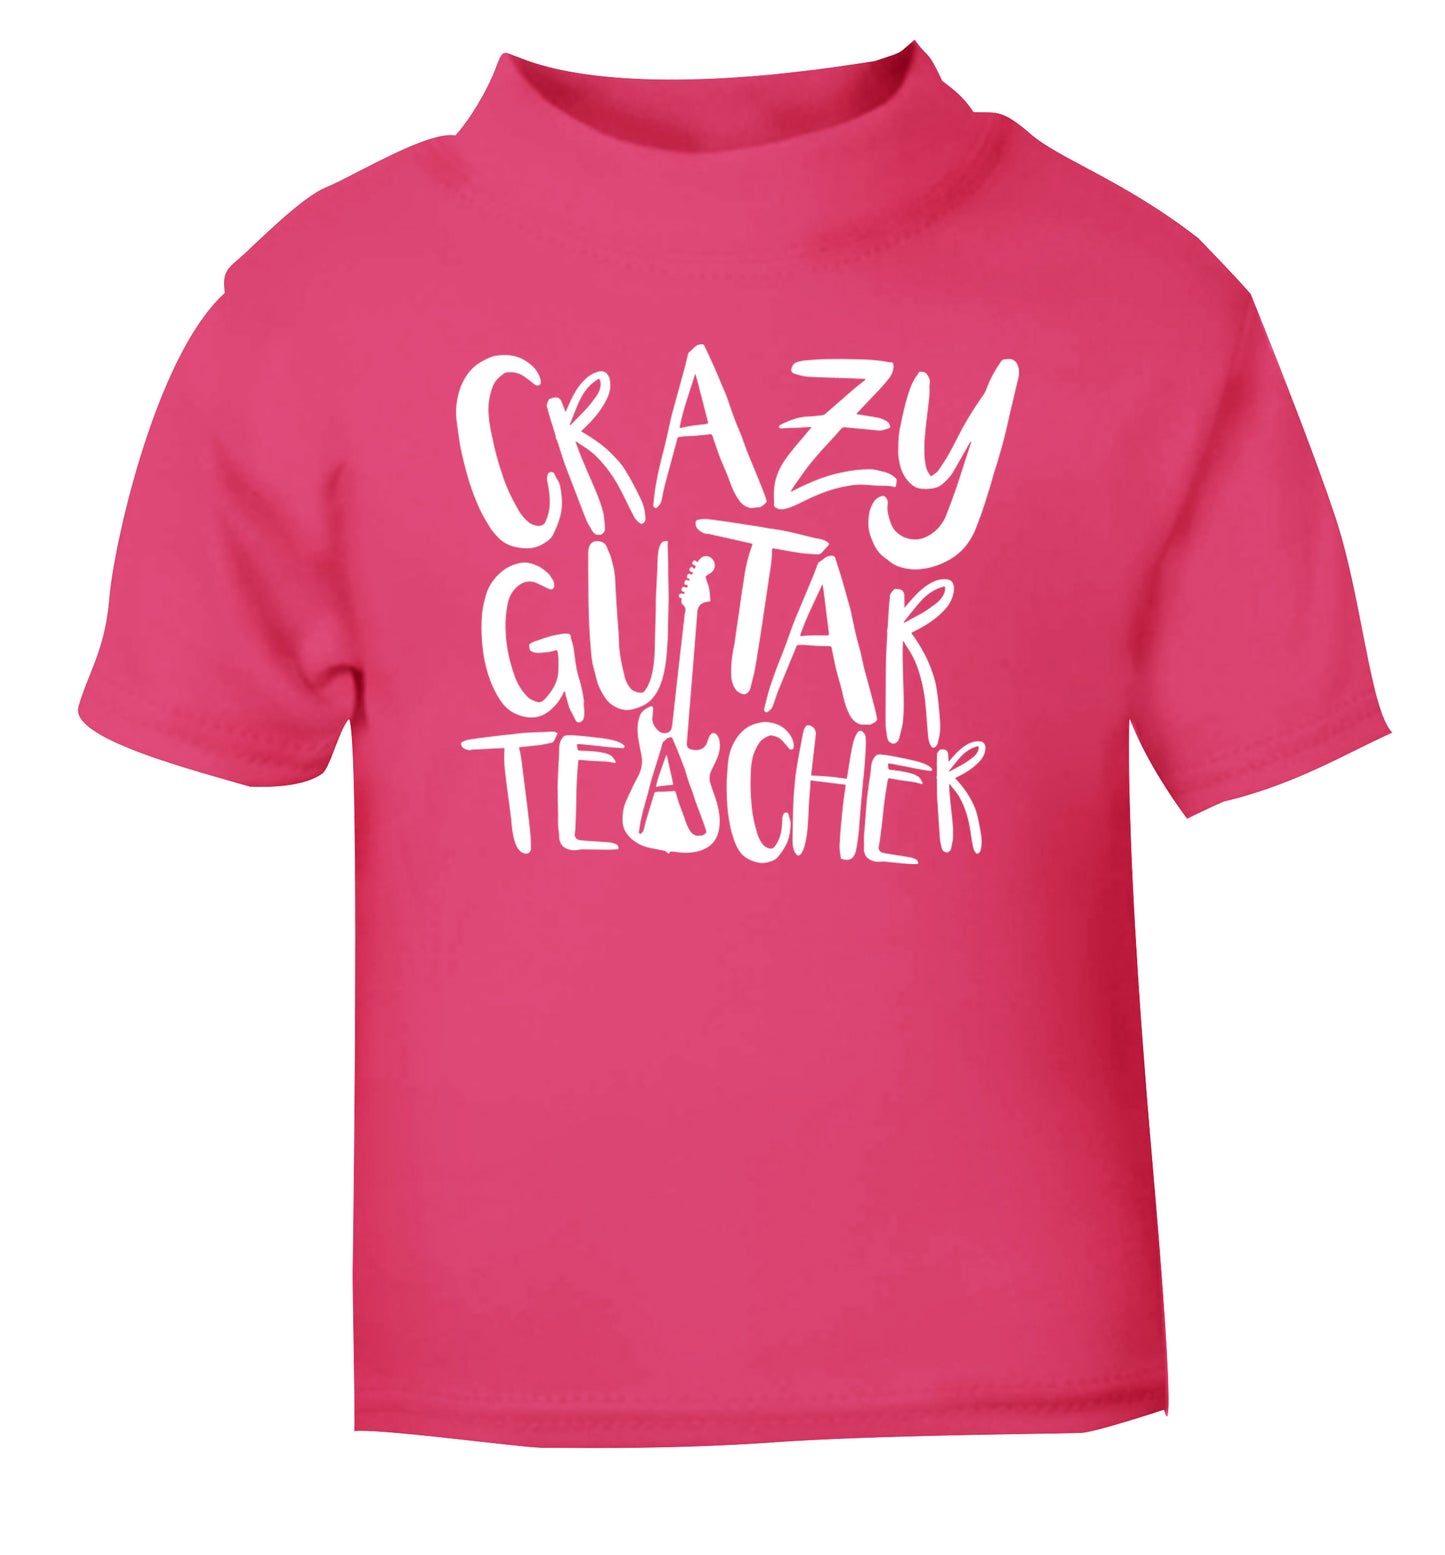 Crazy guitar teacher pink Baby Toddler Tshirt 2 Years